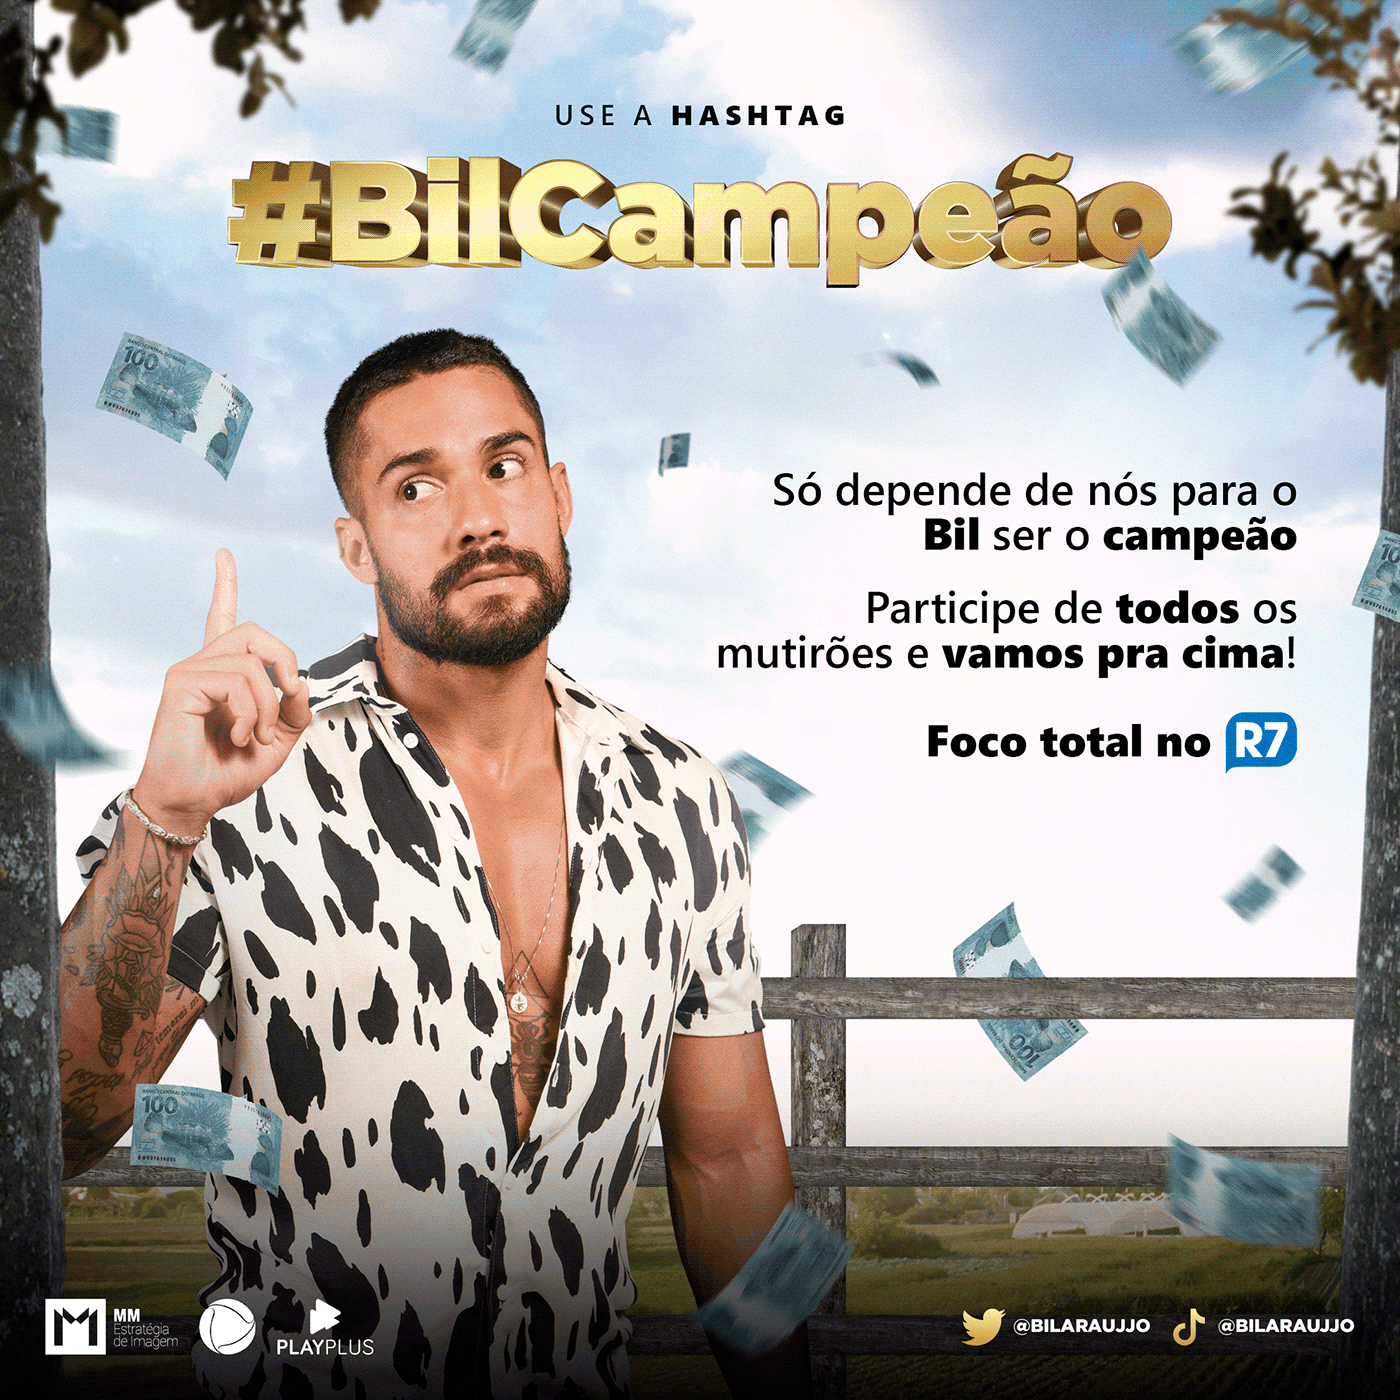 A Fazenda BBB big brother brasil BIL ARAÚJO reality show RECORD TV social media A FAZENDA 13 Big Brother rural